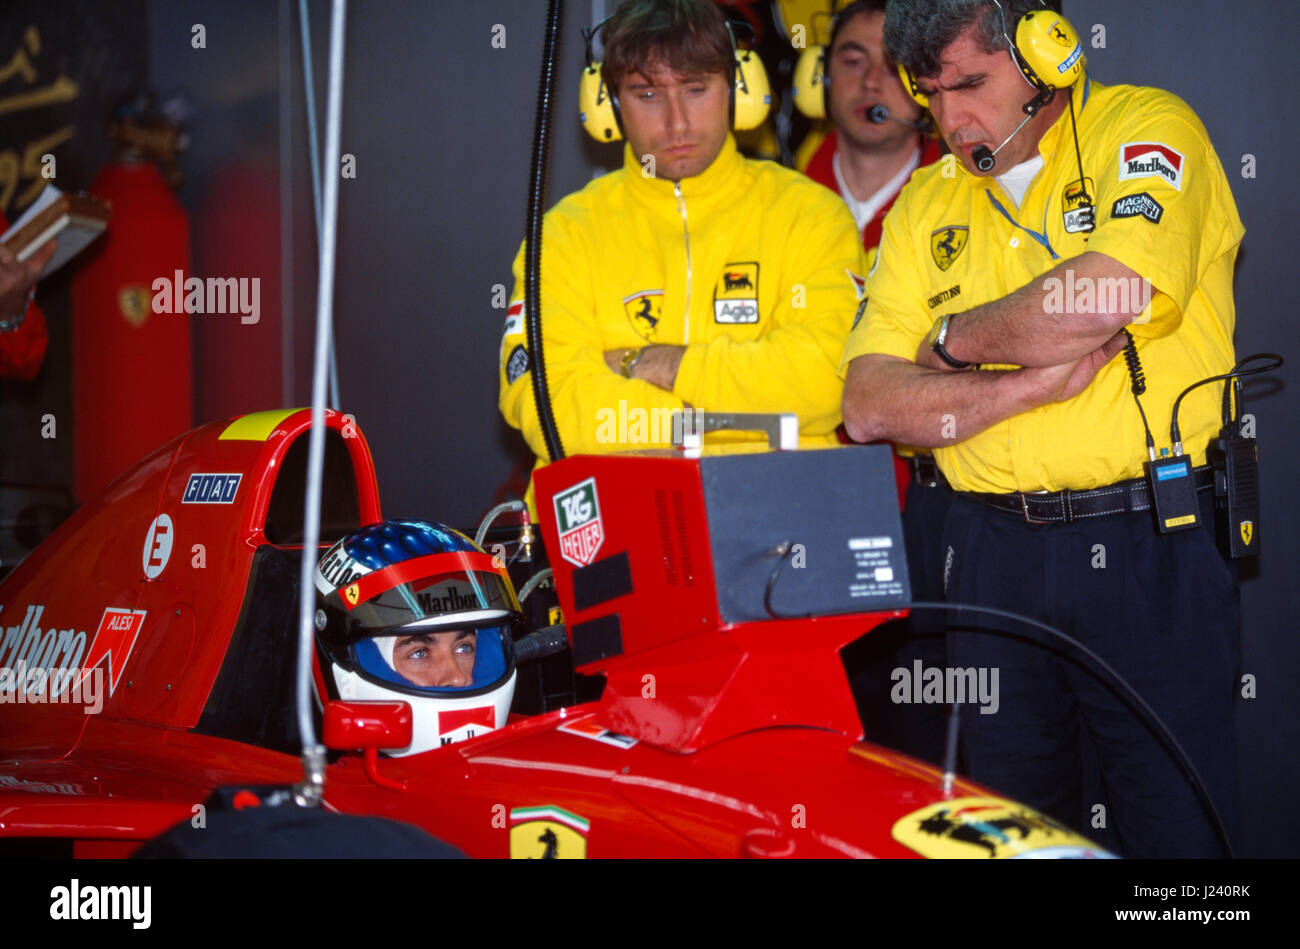 F1, Ferrari, jean Alesi, Gp San Marin 1995 Stock Photo - Alamy